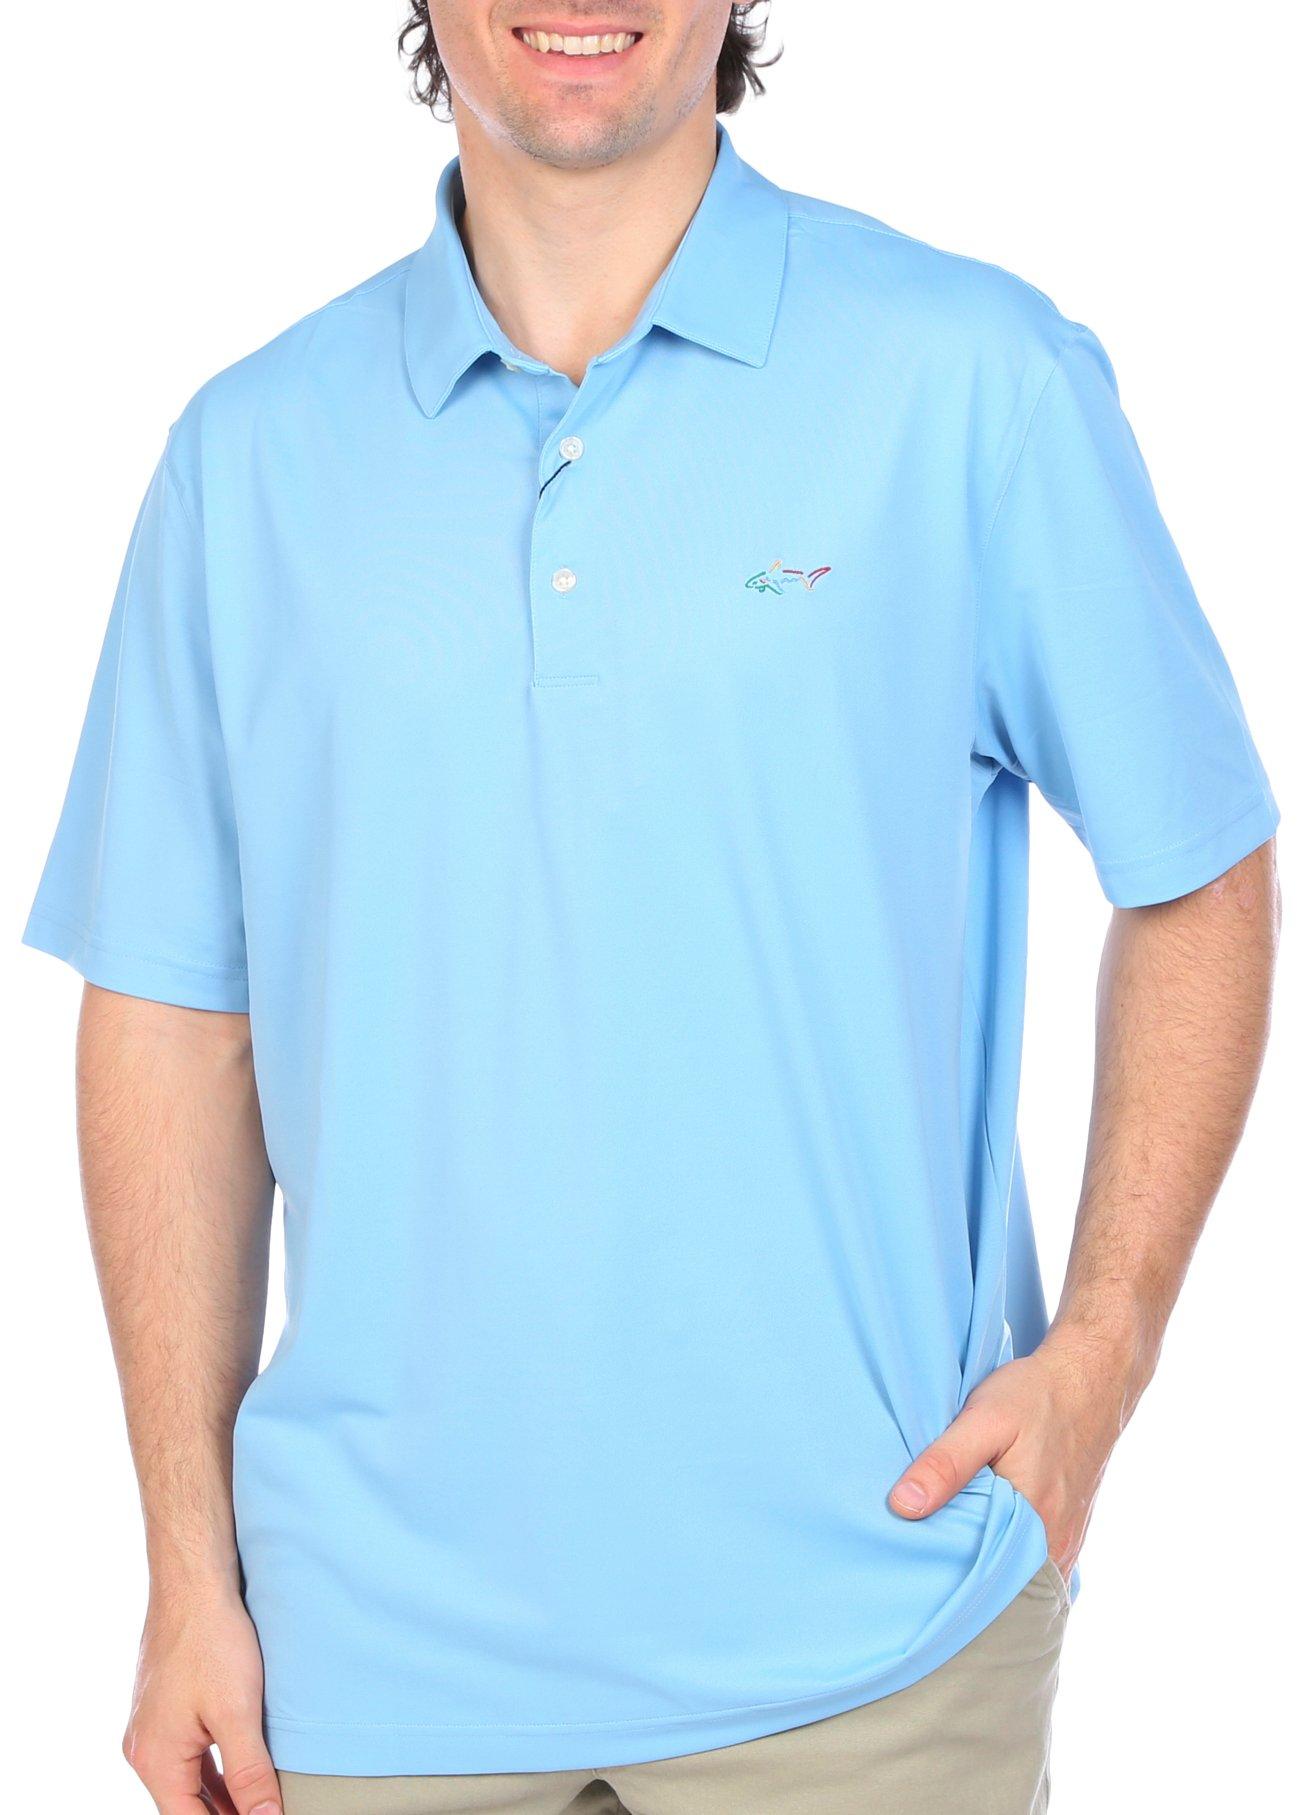 Greg Norman Mens Mesh Knit Short Sleeve Polo Shirt